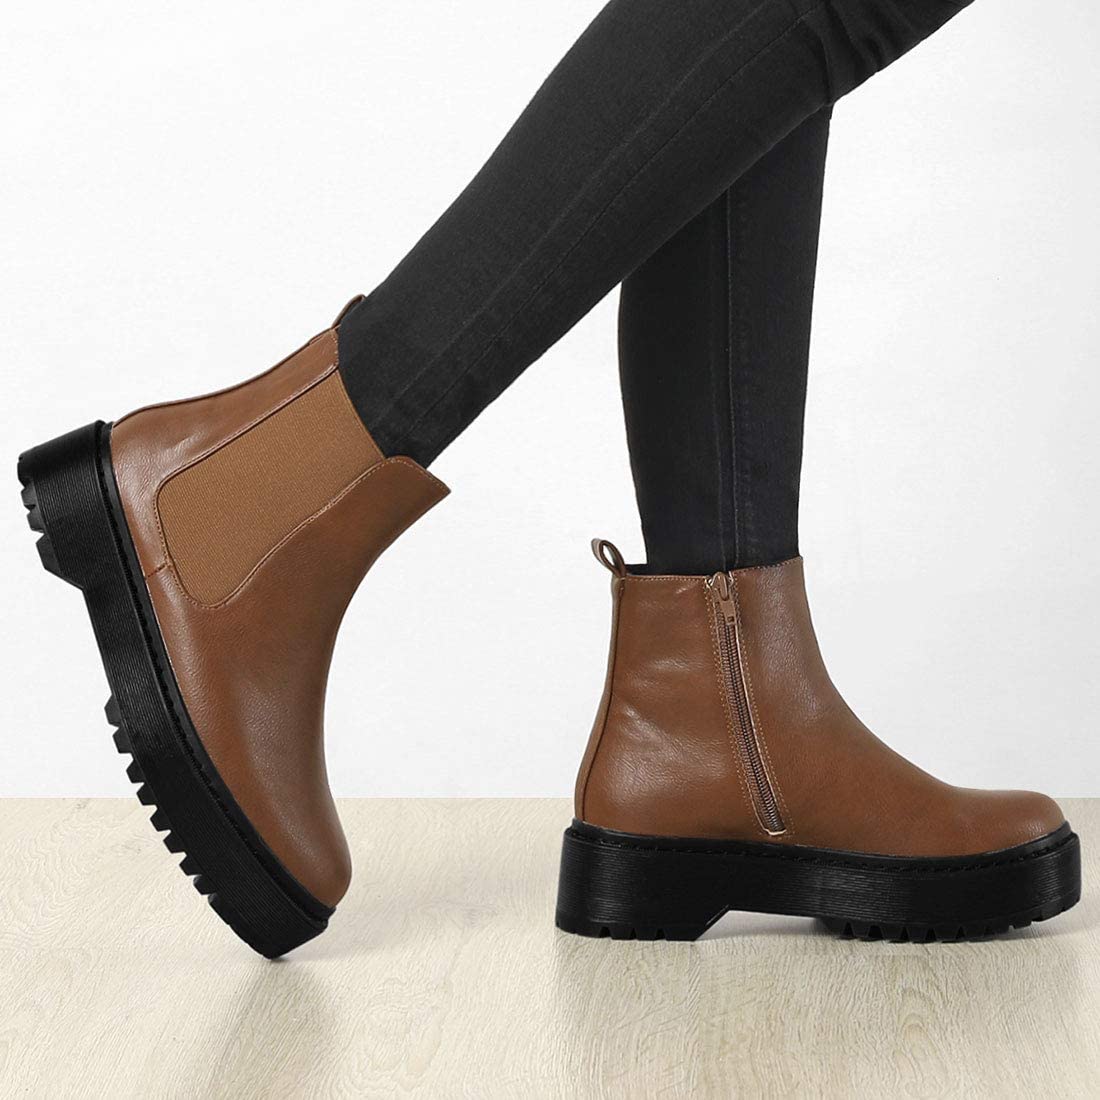 Allegra K Women's Chelsea Platform Ankle Boots